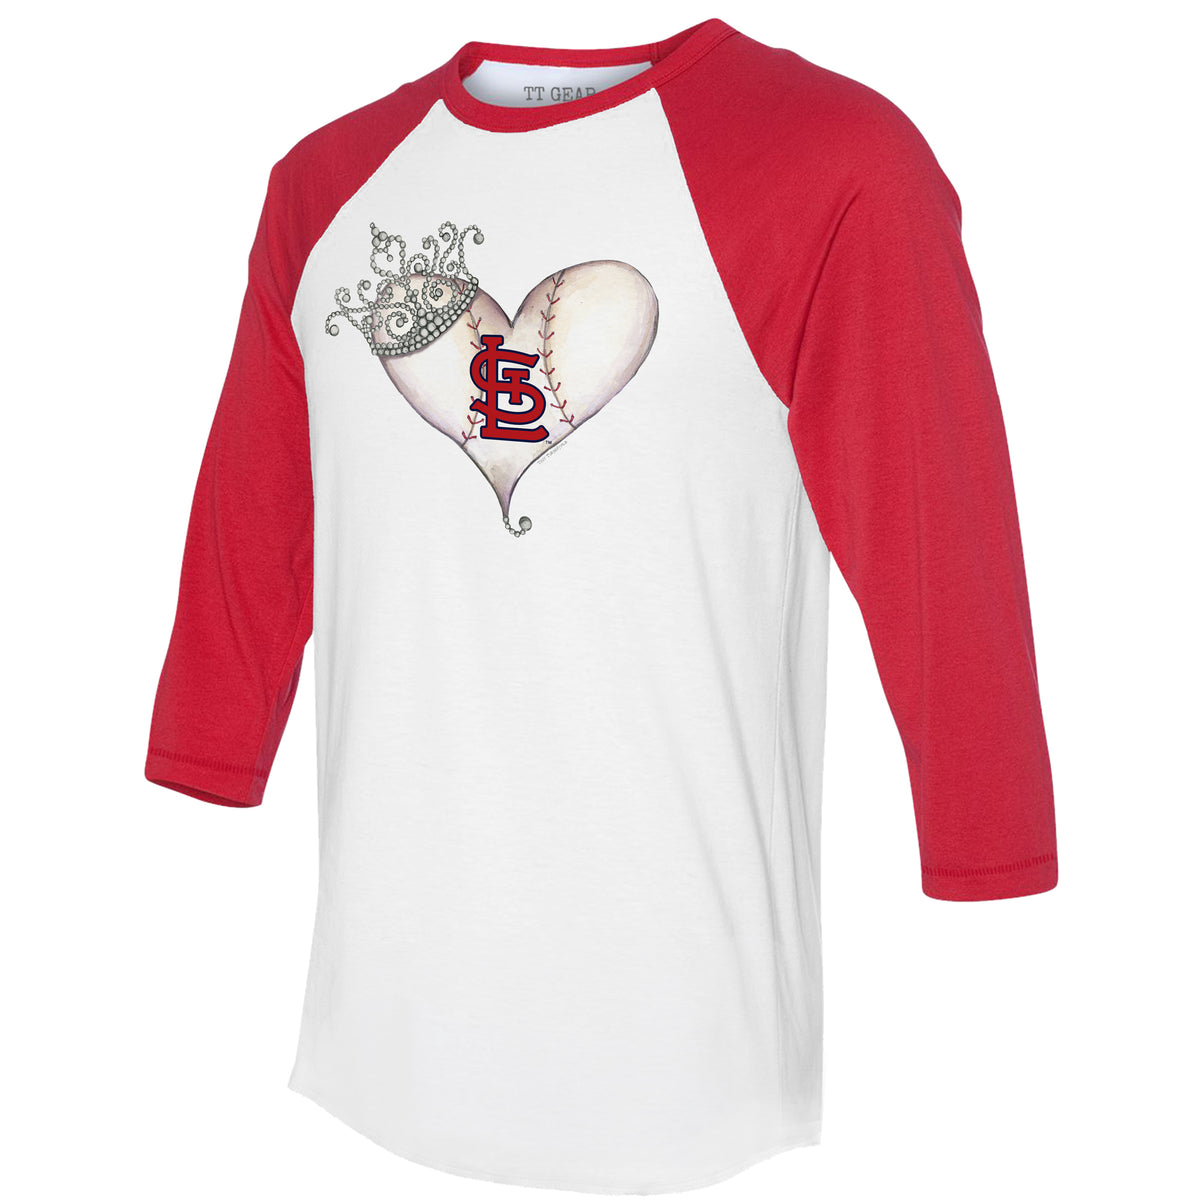 Toddler Tiny Turnip White St. Louis Cardinals Diamond Cross Bats T-Shirt Size: 2T